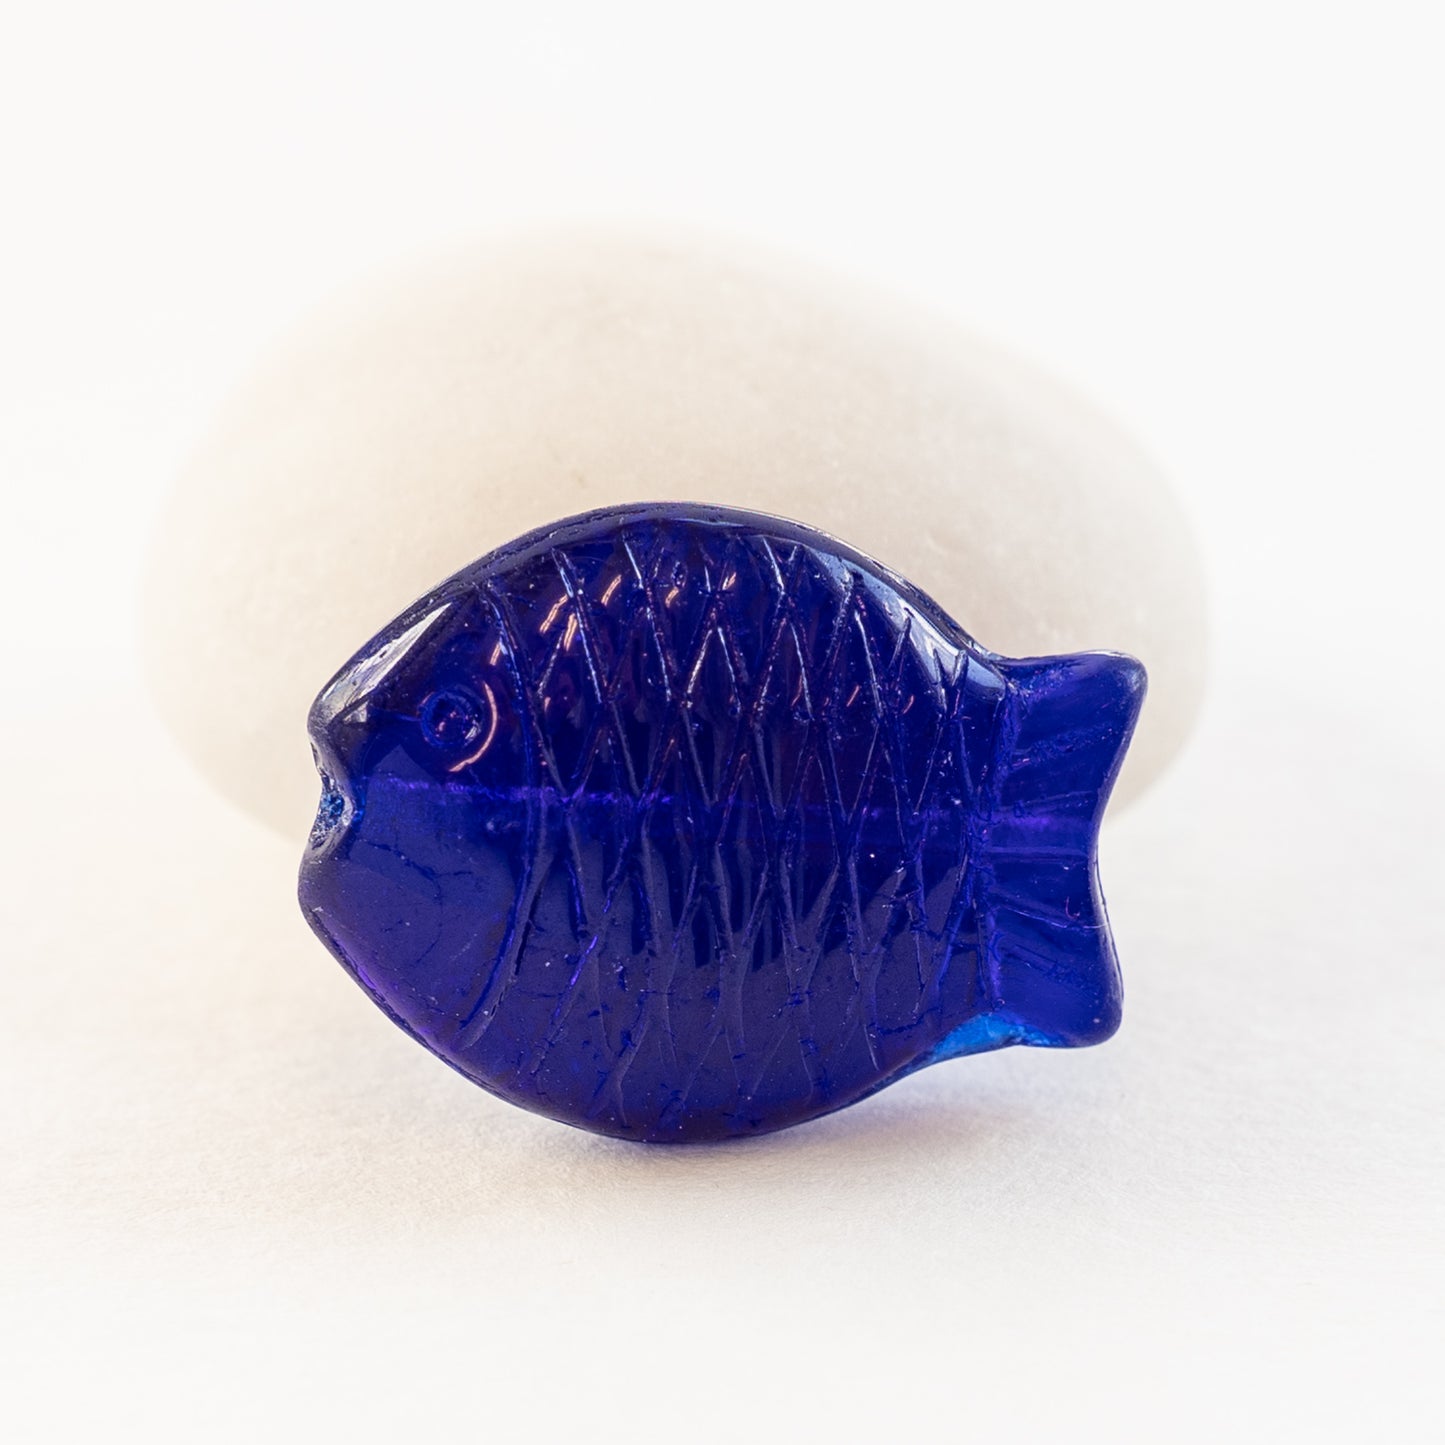 Large Glass Fish Beads - Cobalt Blue - 4 beads